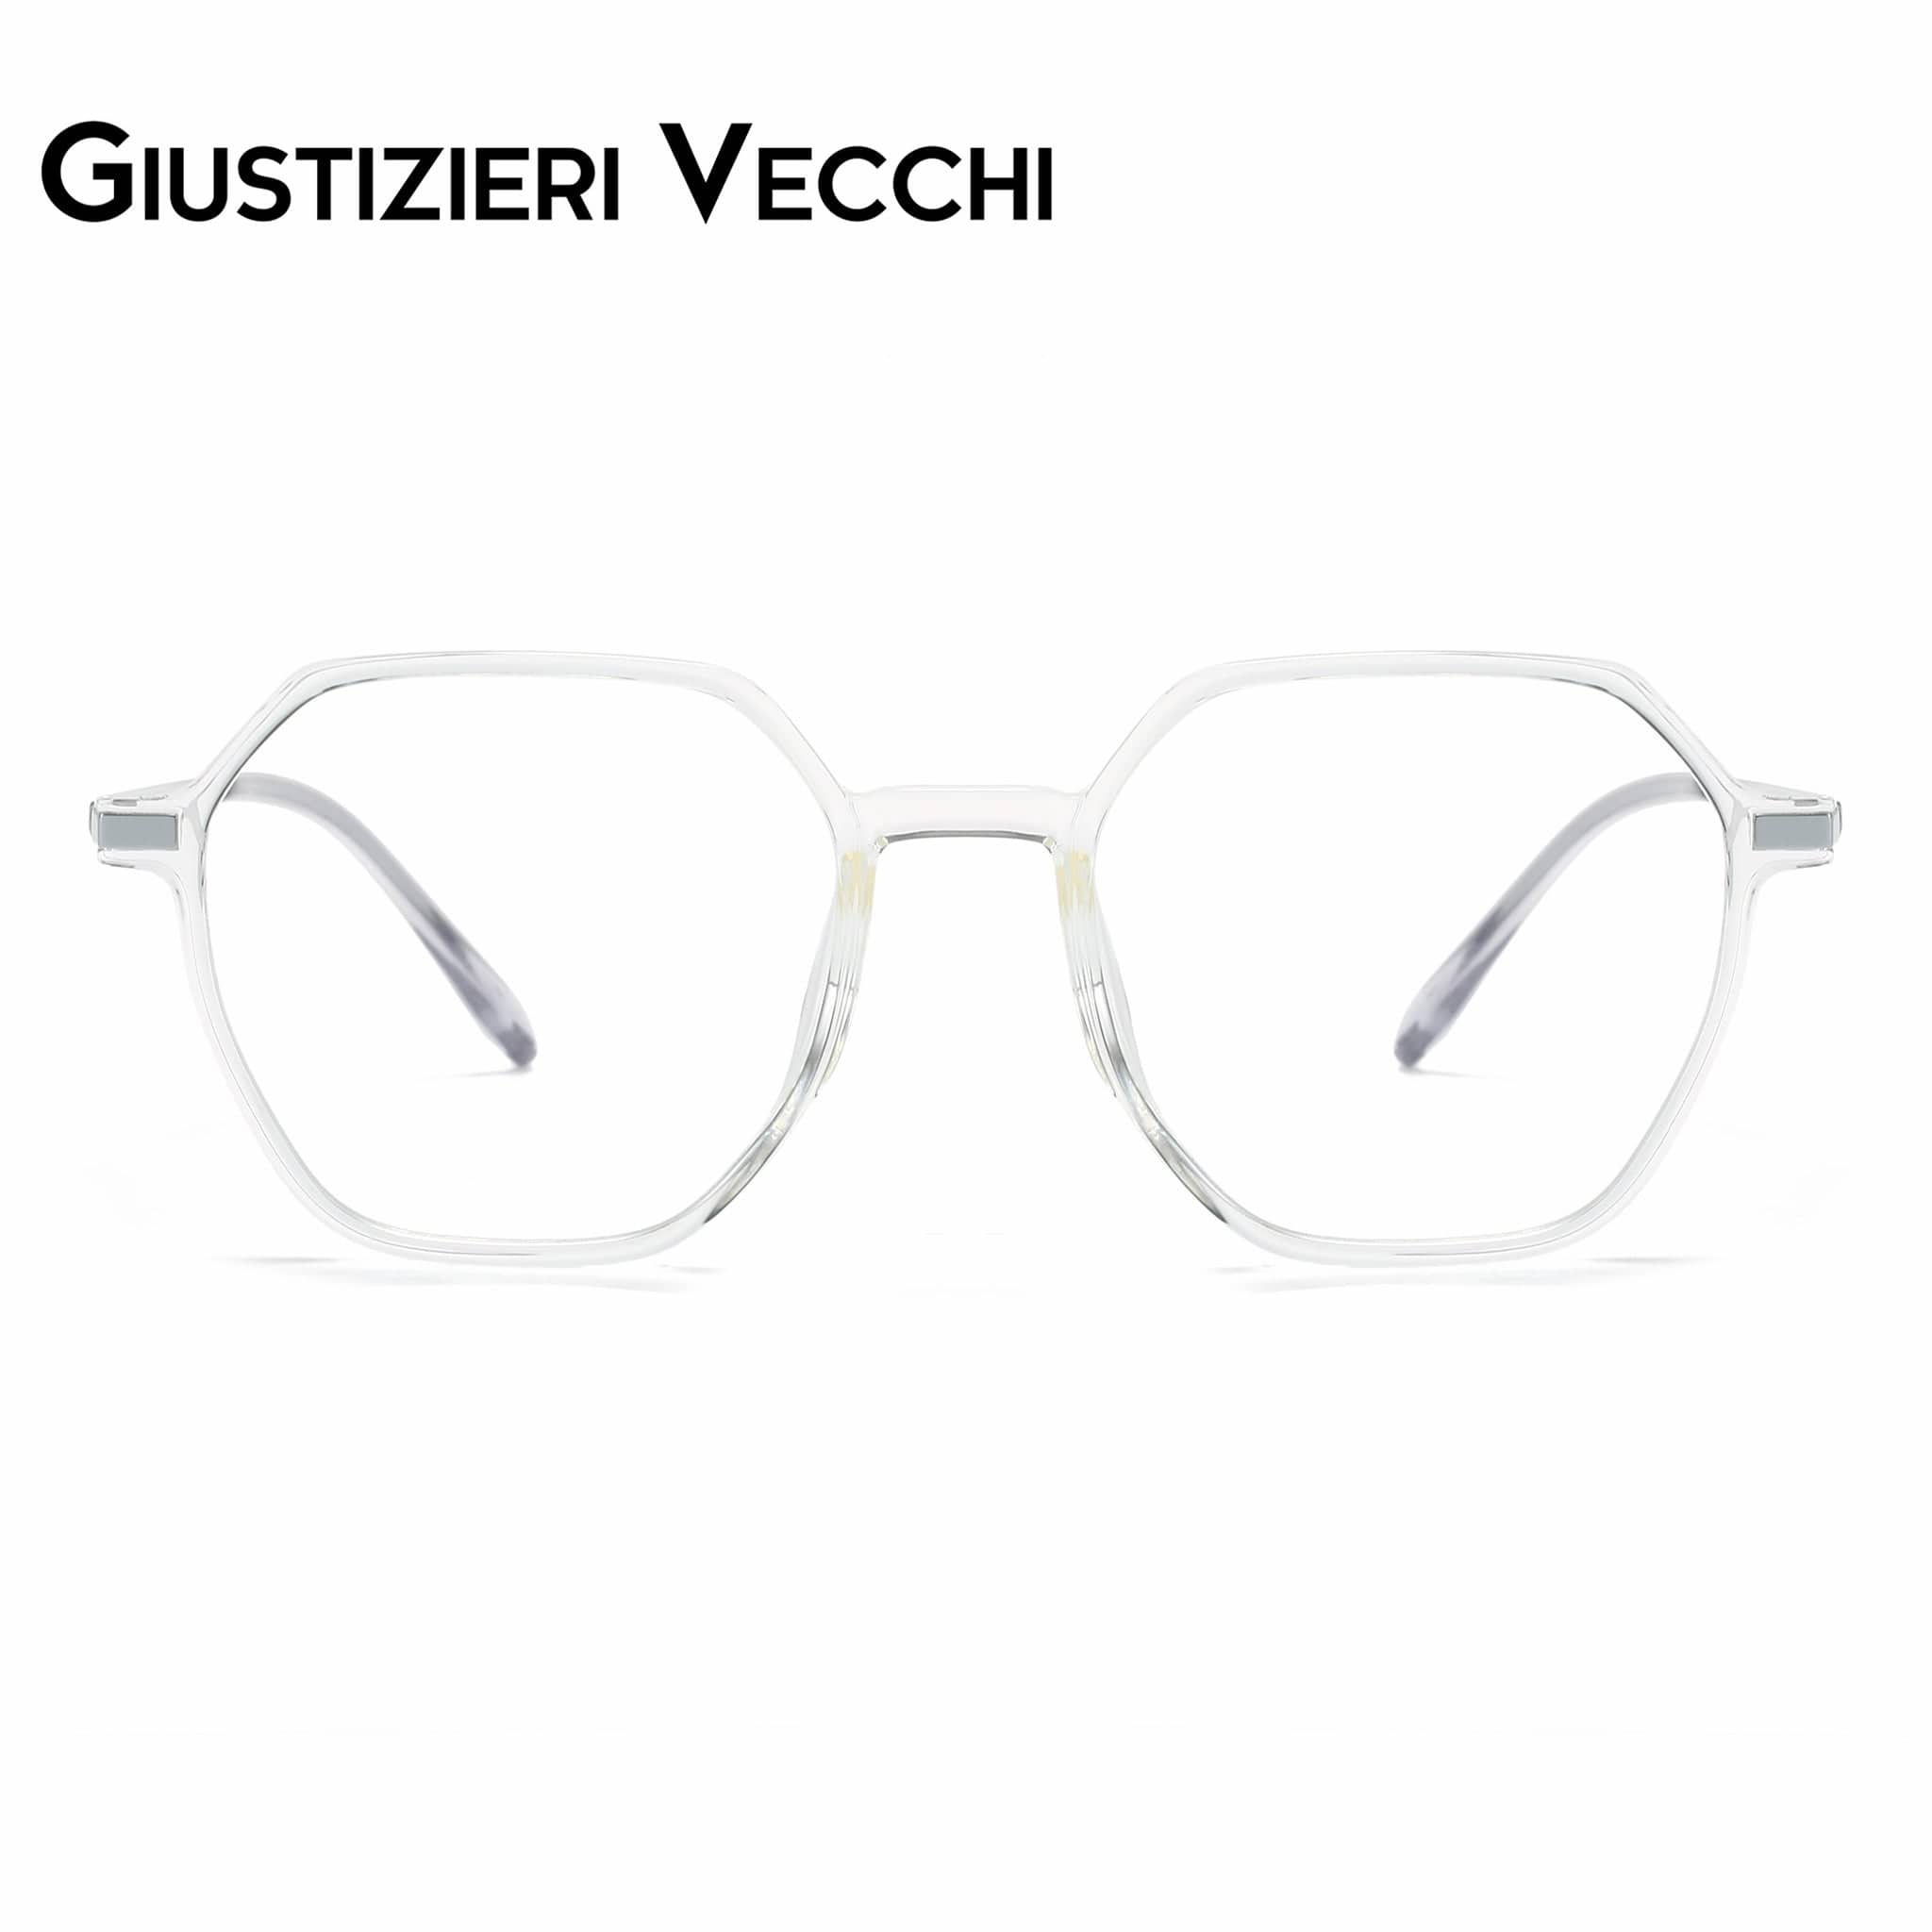 GIUSTIZIERI VECCHI Eyeglasses Medium / Clear Crystal IceRider Uno